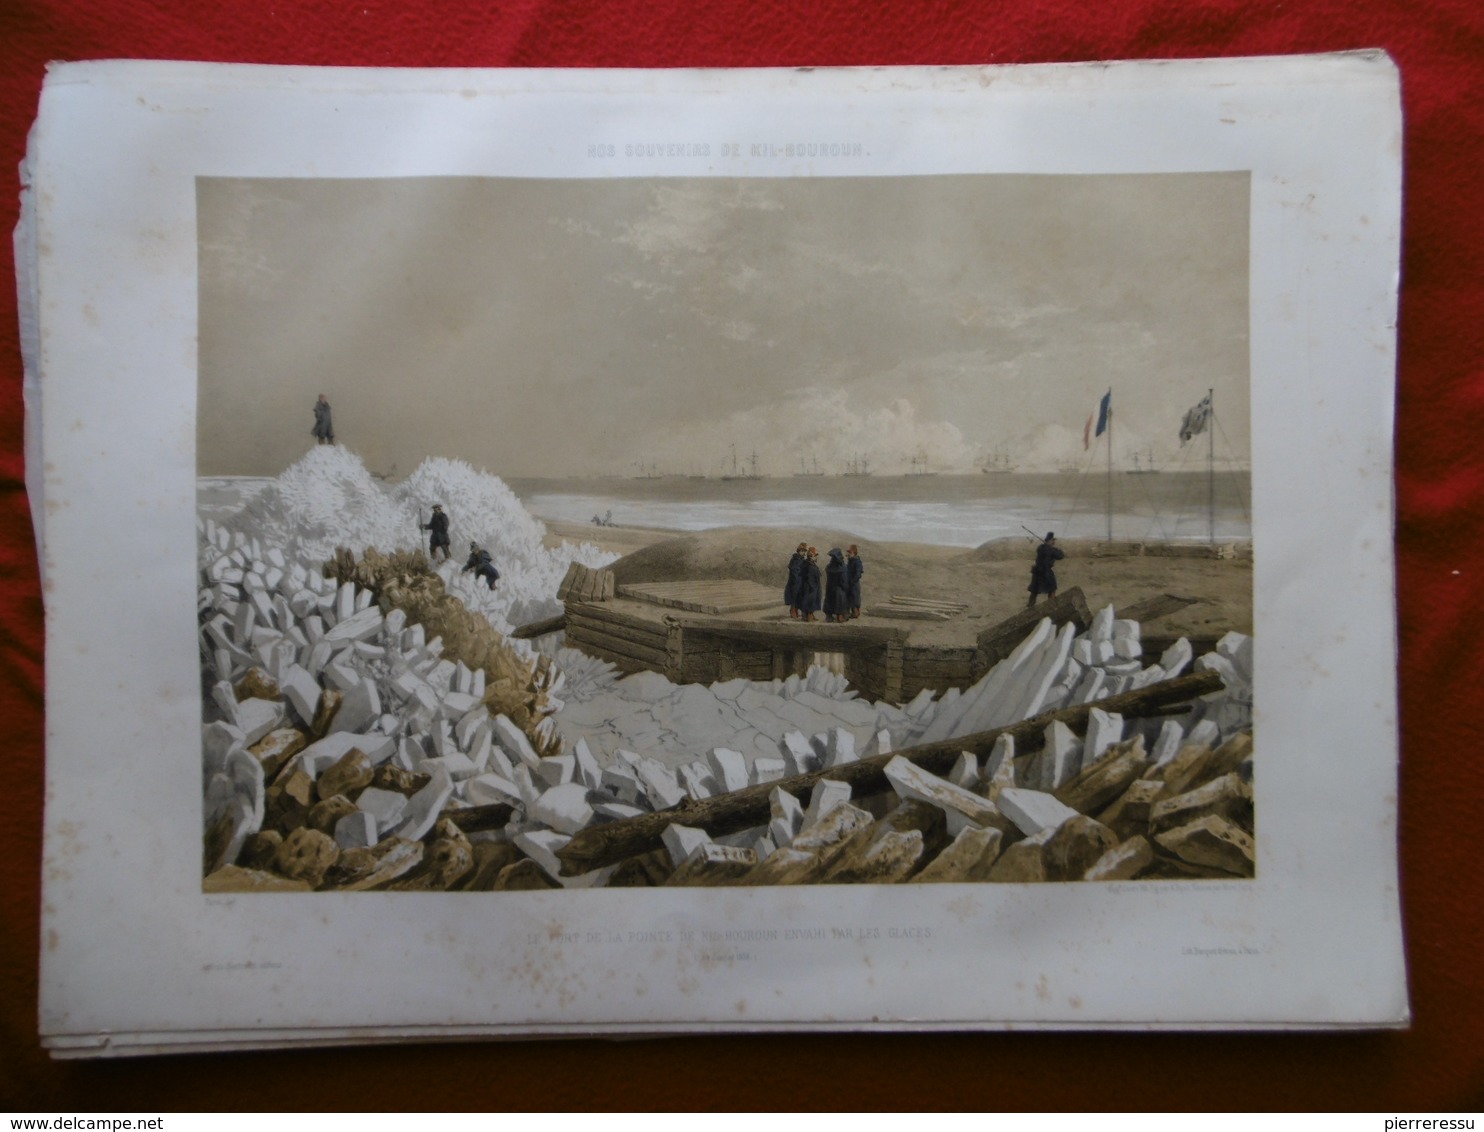 NOS SOUVENIRS DE KIL BOUROUN LITHOGRAPHIE 1855 1856 PARIS ARTHUS BERTRAND